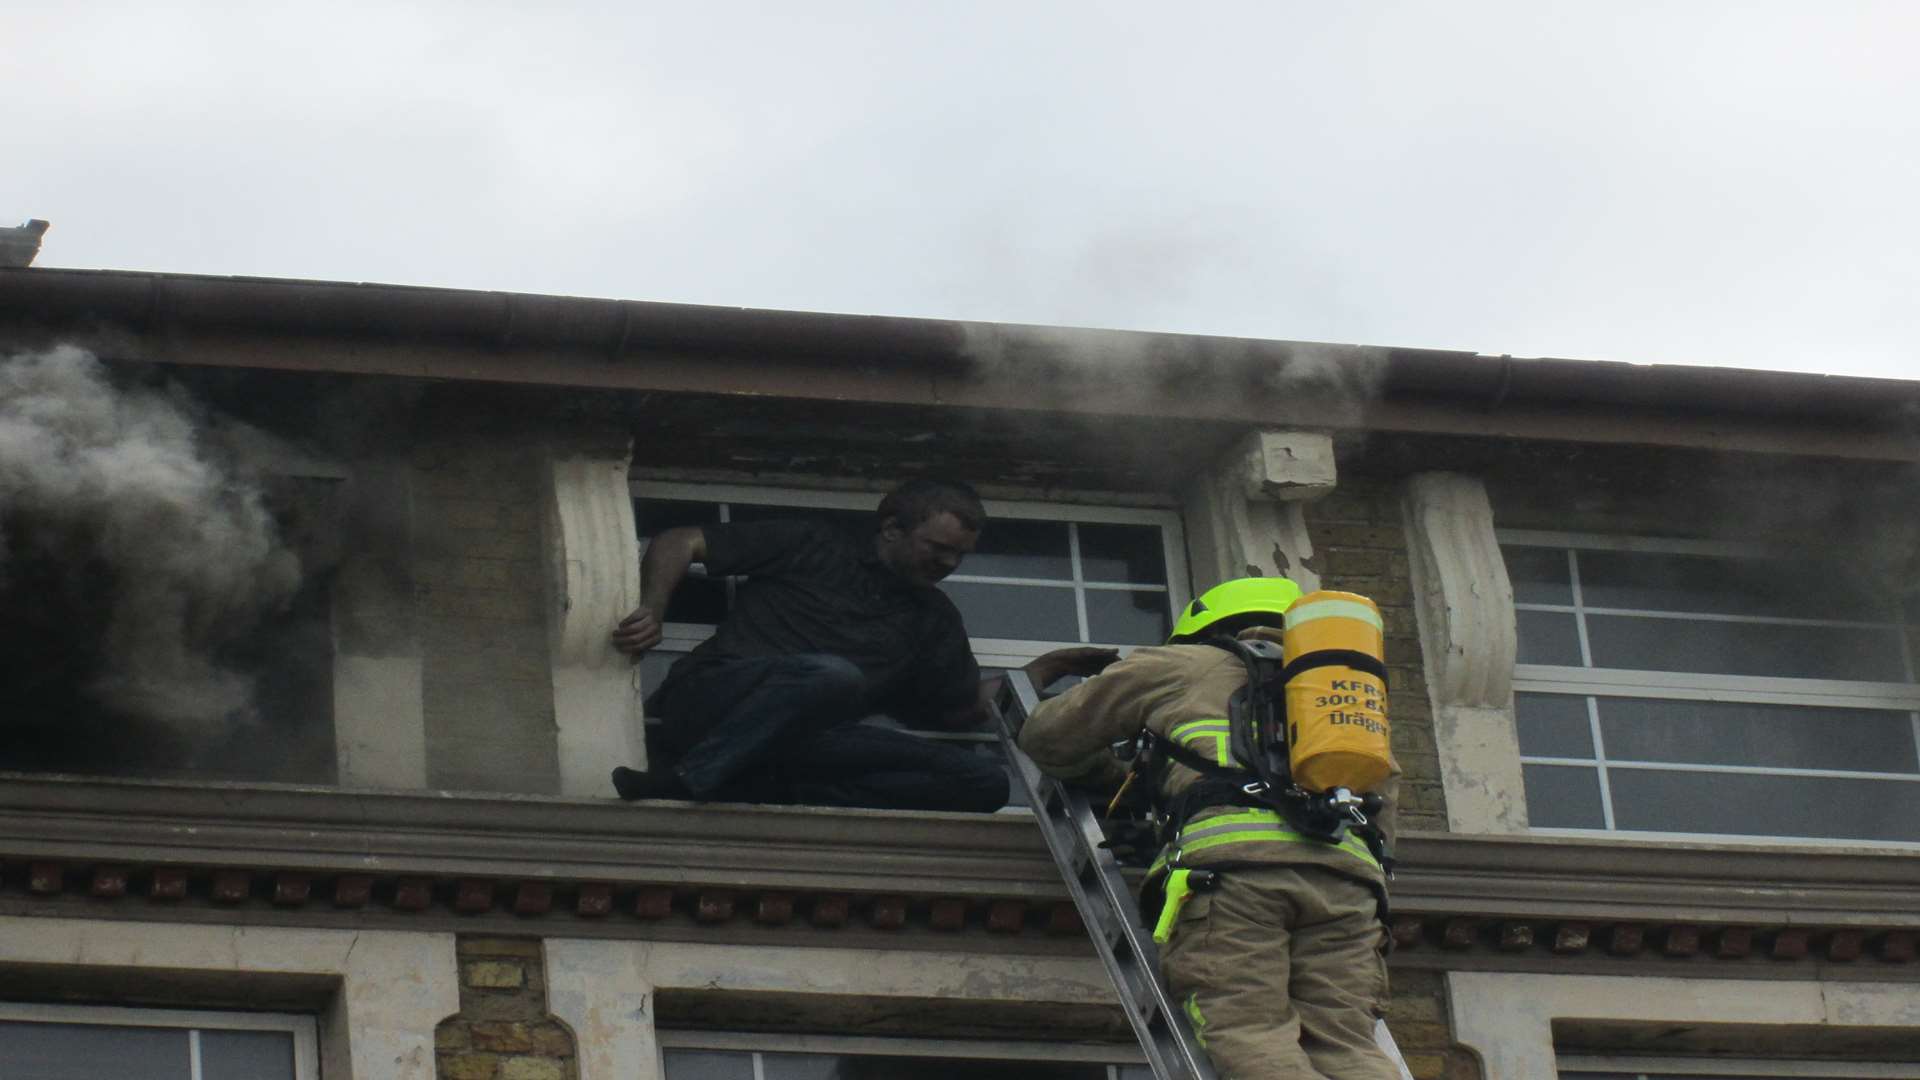 Craig climbs from the top floor window